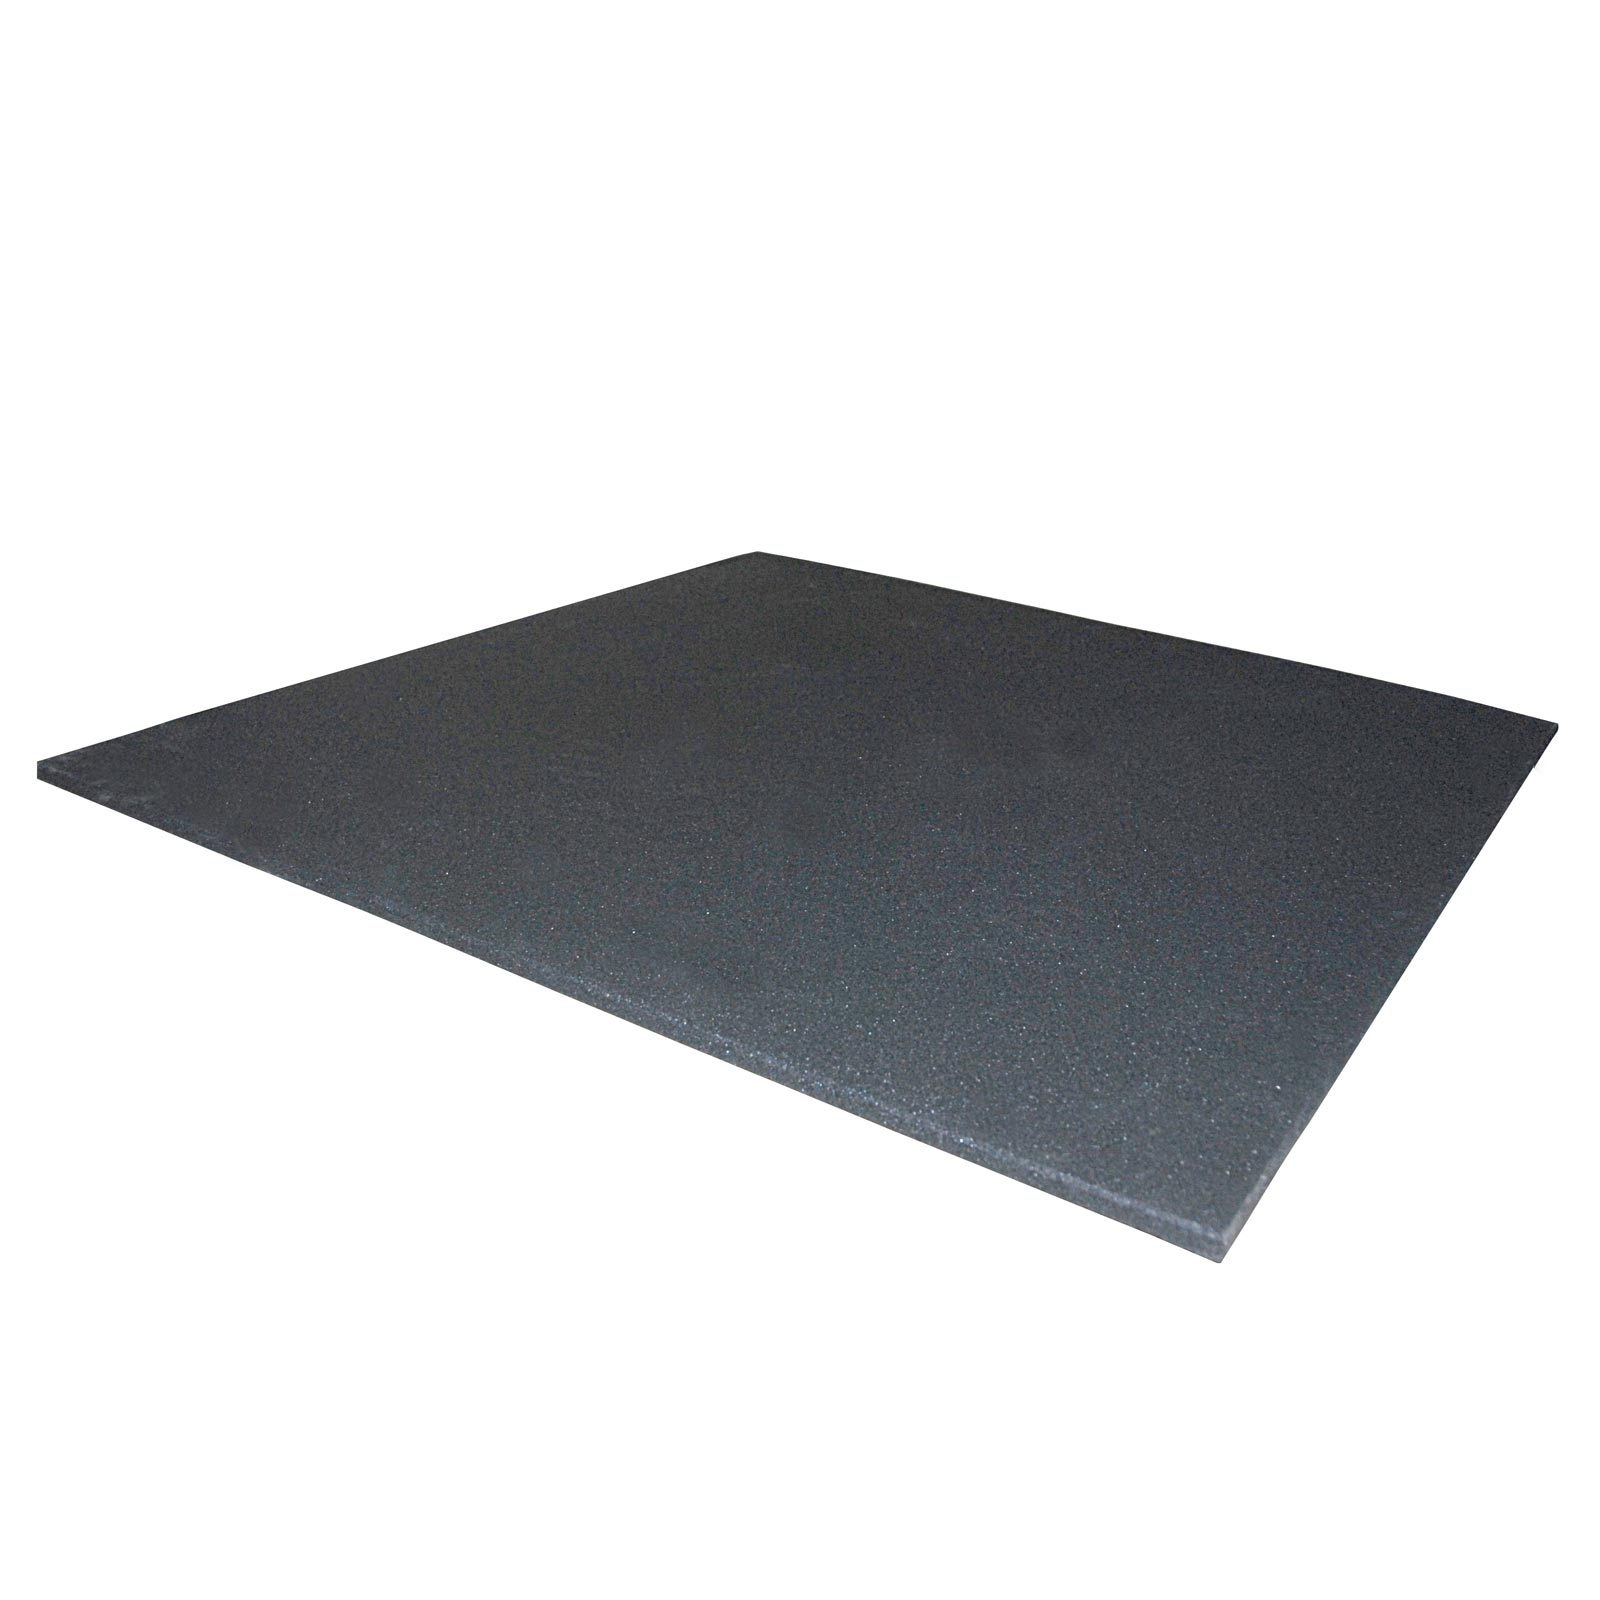 Rival Rubber Flooring Mat - Size: 100cm x 100cm